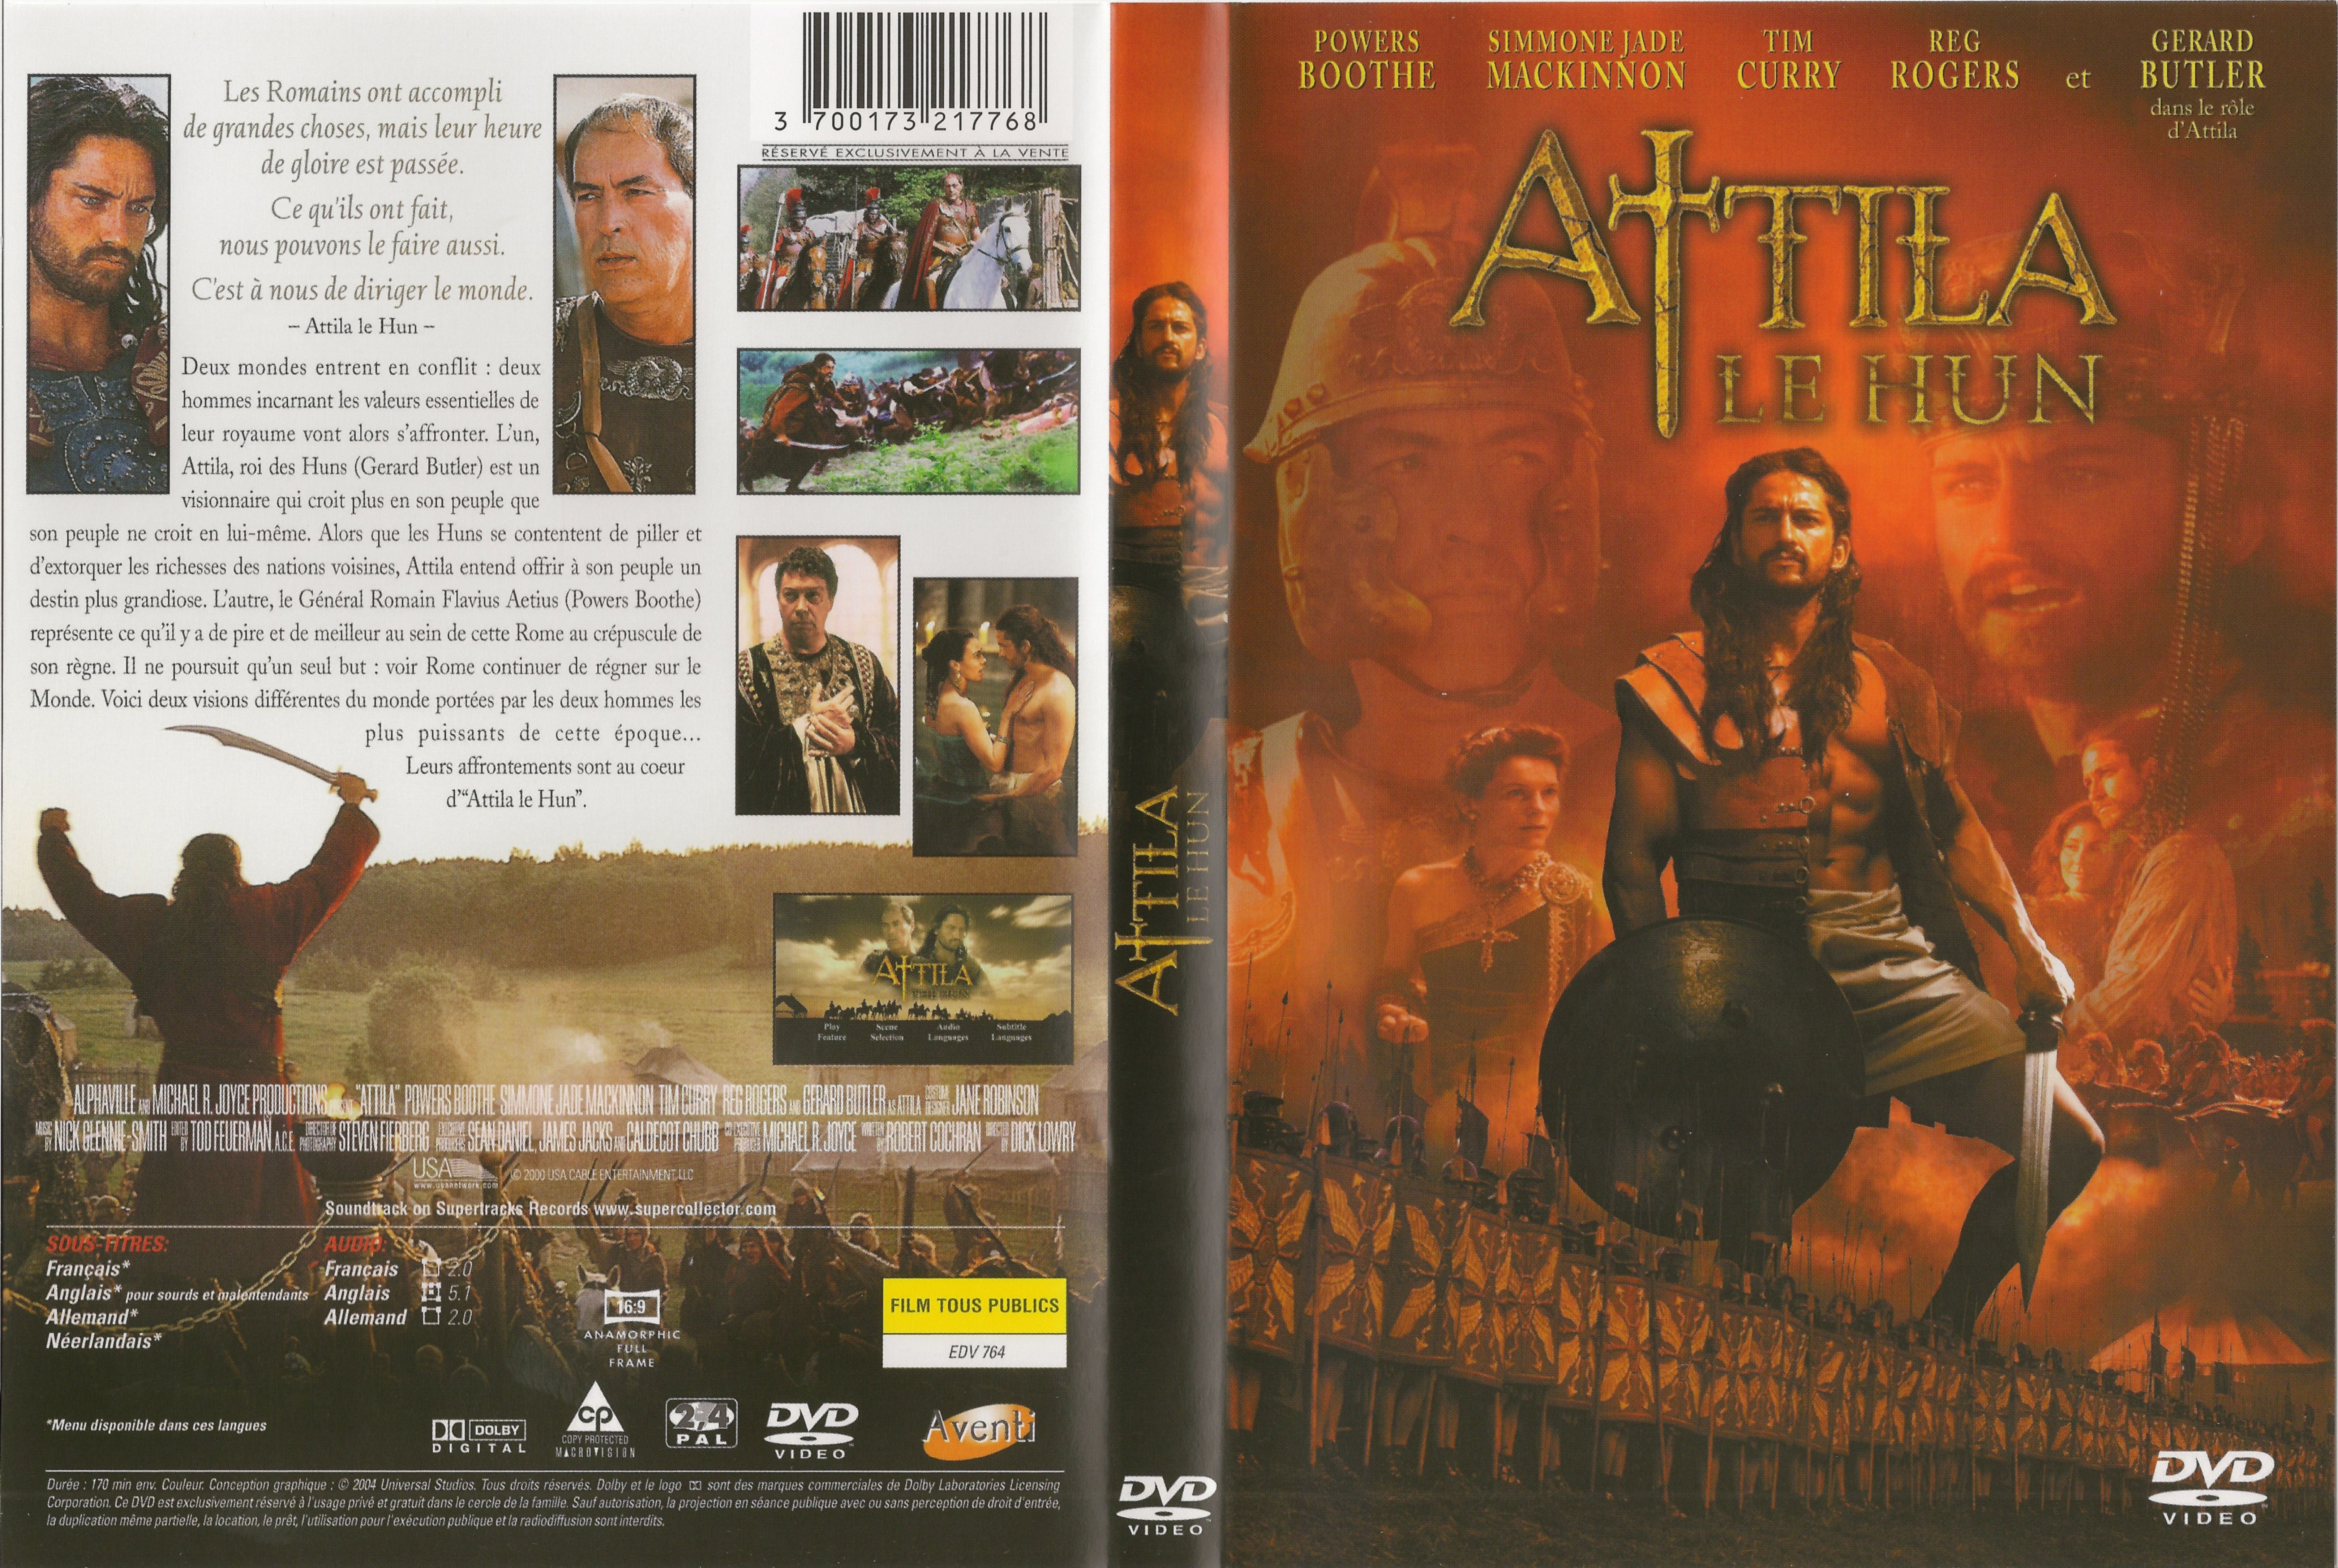 Jaquette DVD Attila le hun